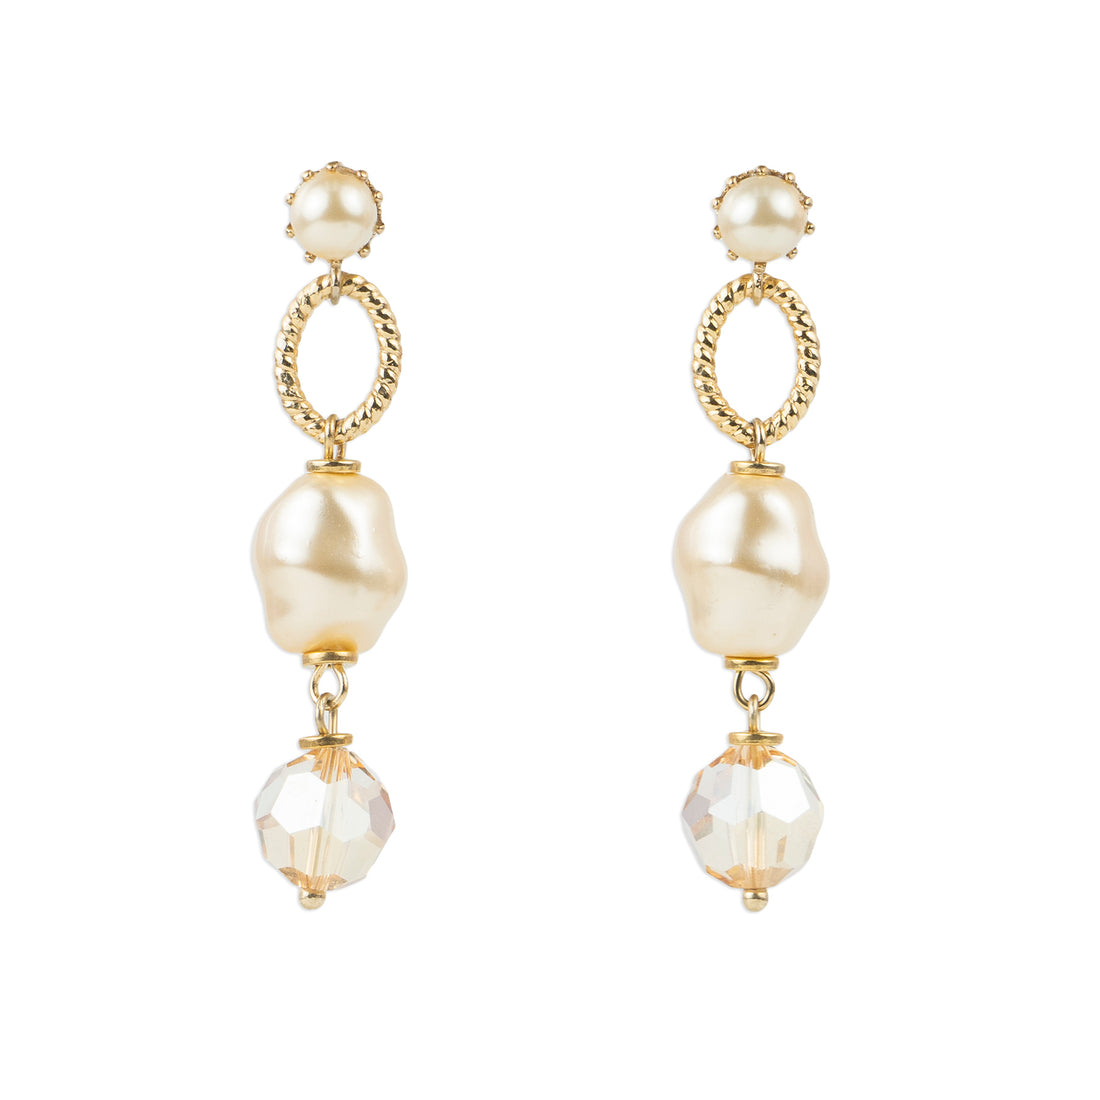 Pearl and Swarovski crystal pendant earrings